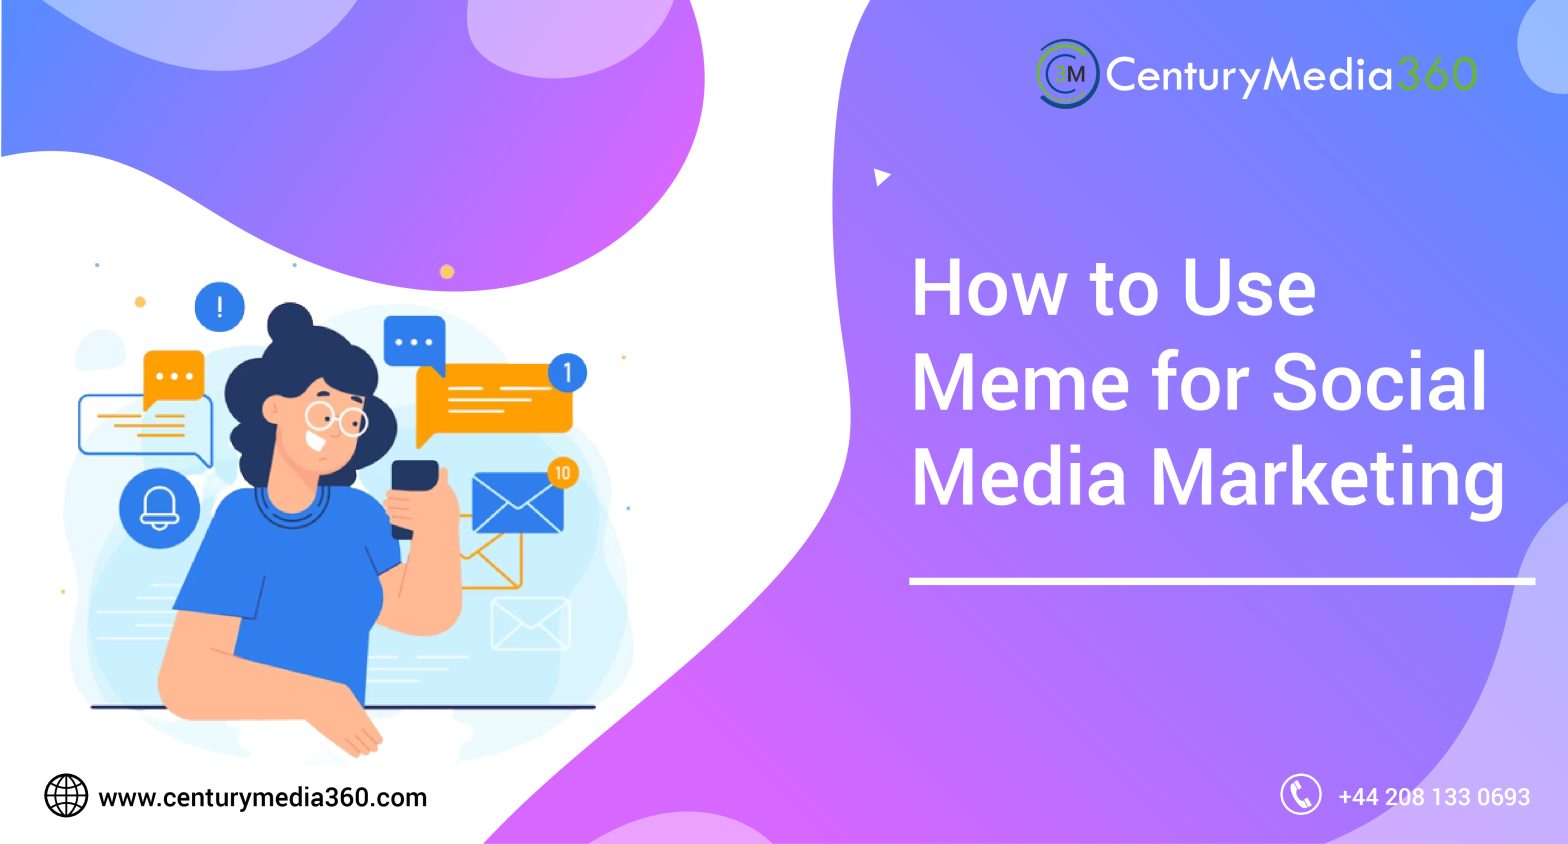 How to Use Meme for Social Media Marketing